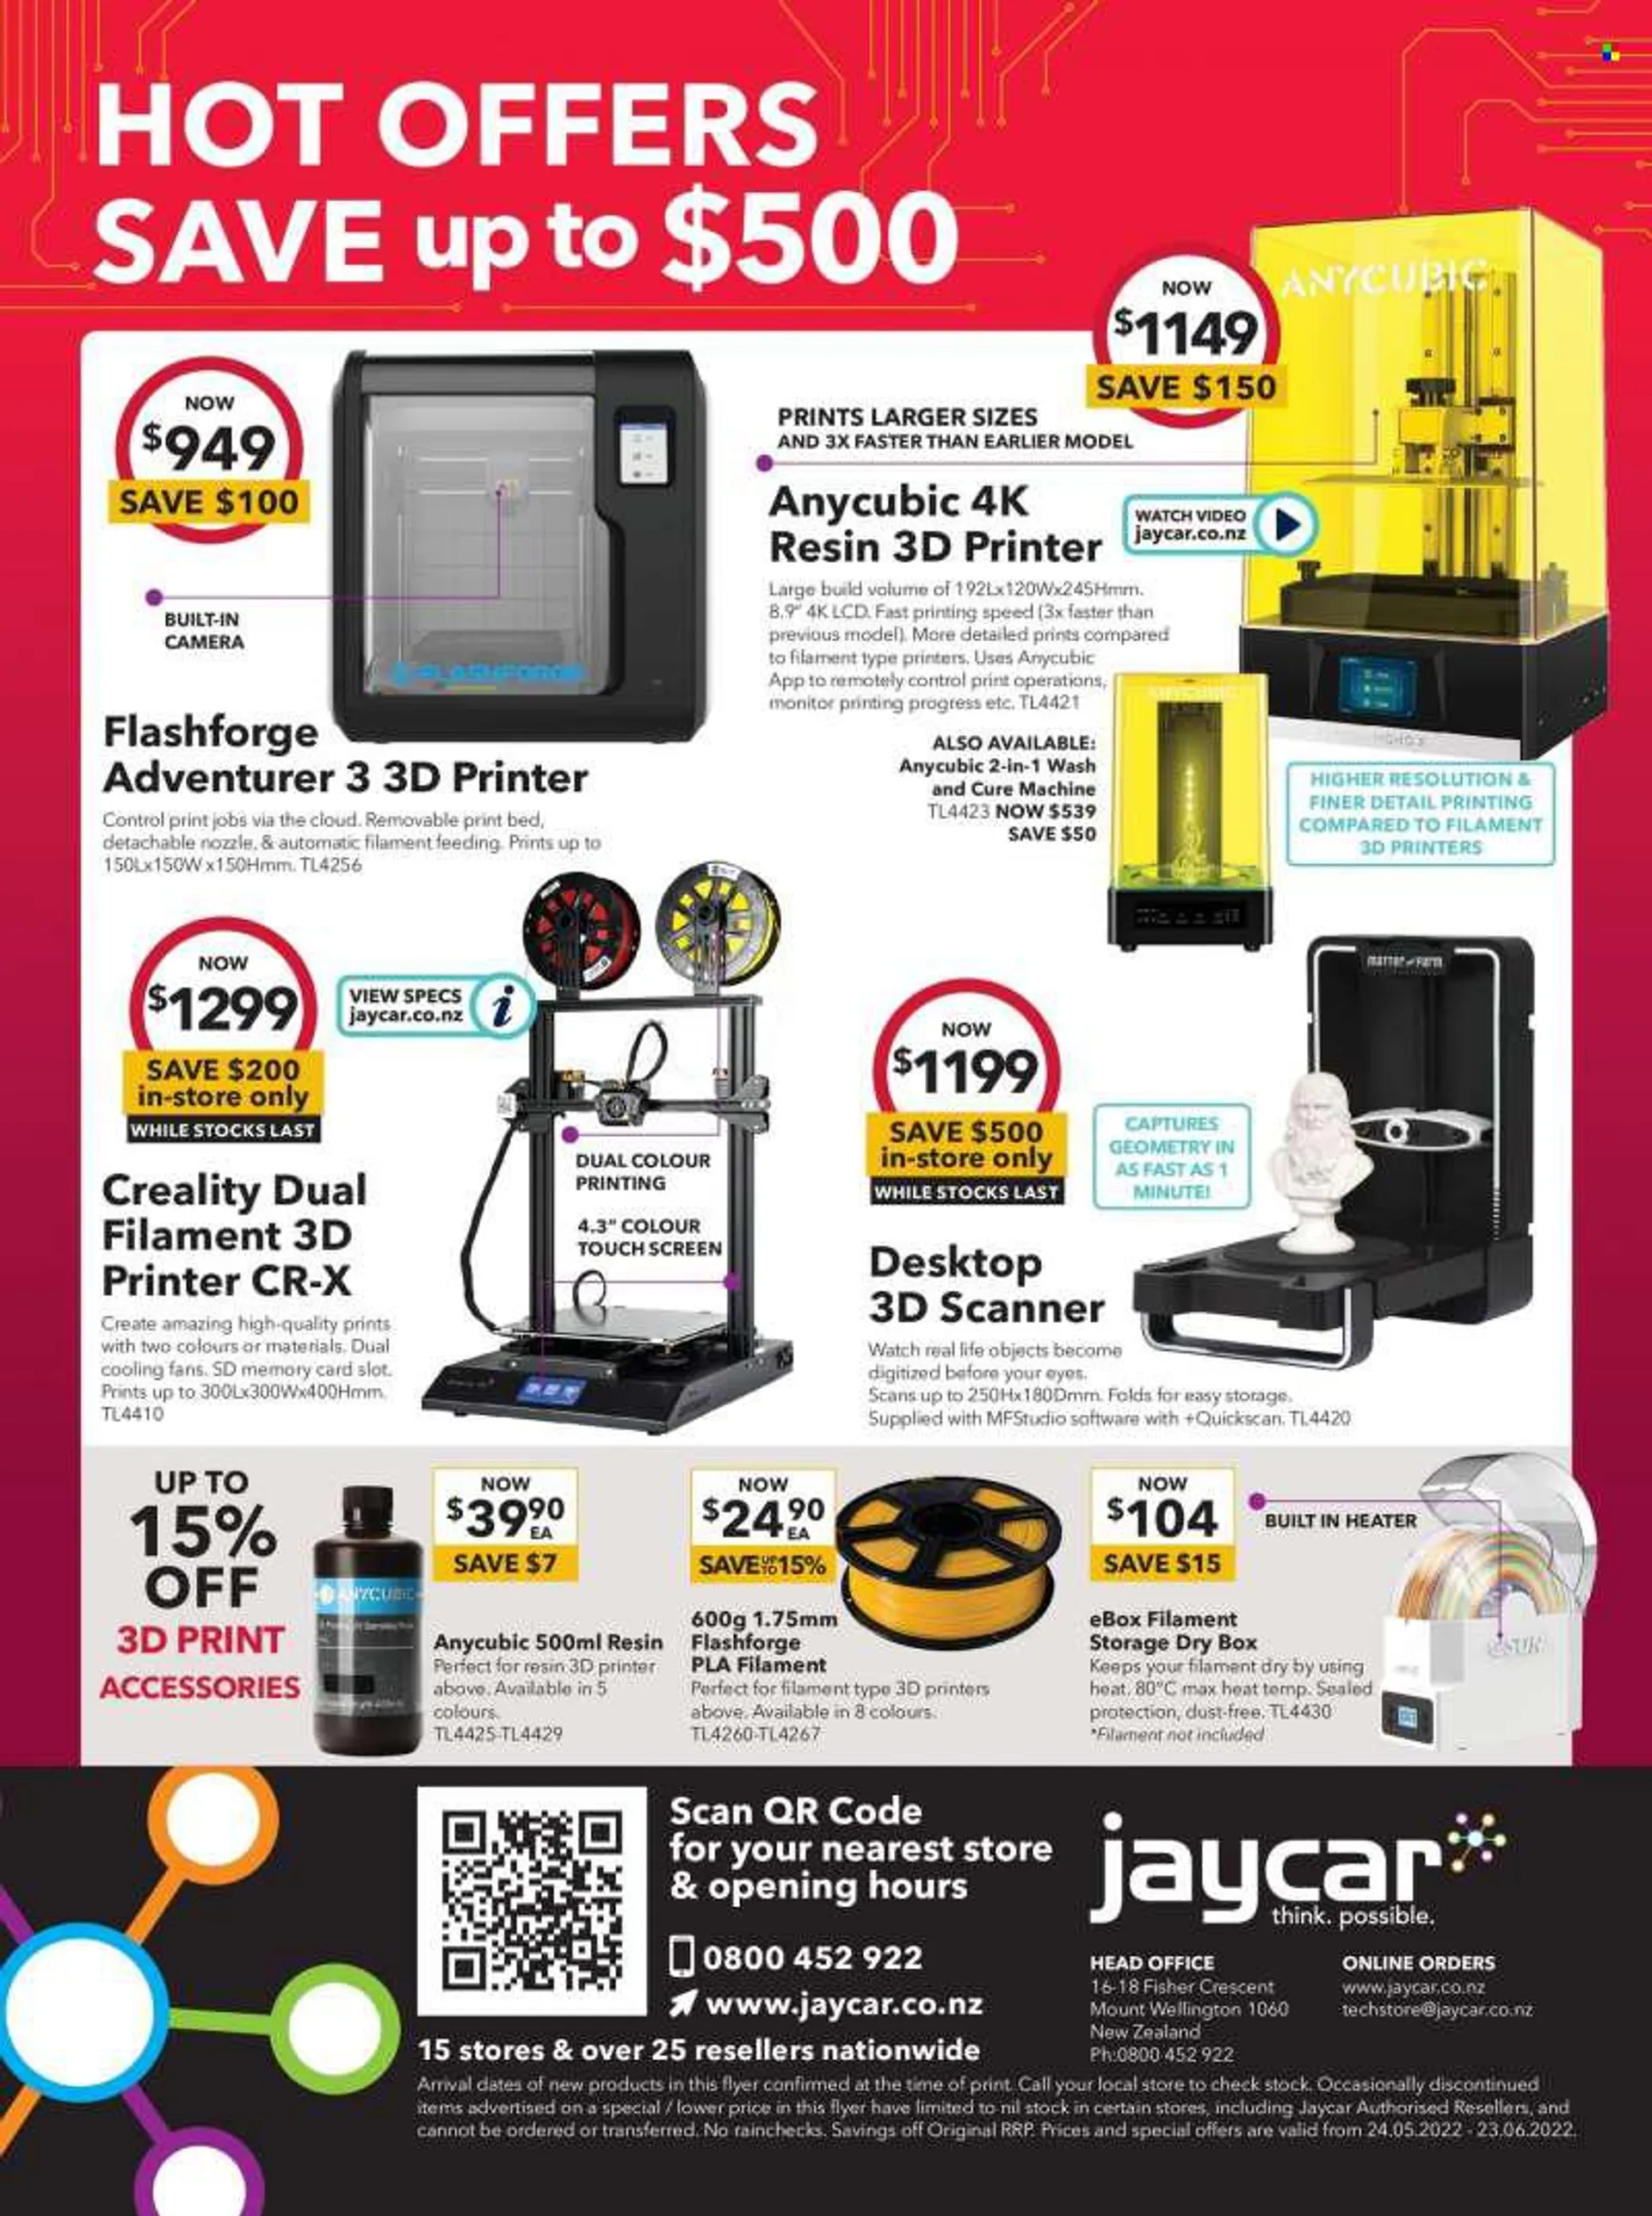 Jaycar Electronics mailer - 24.05.2022 - 23.06.2022. - 24 May 23 June 2022 - Page 8